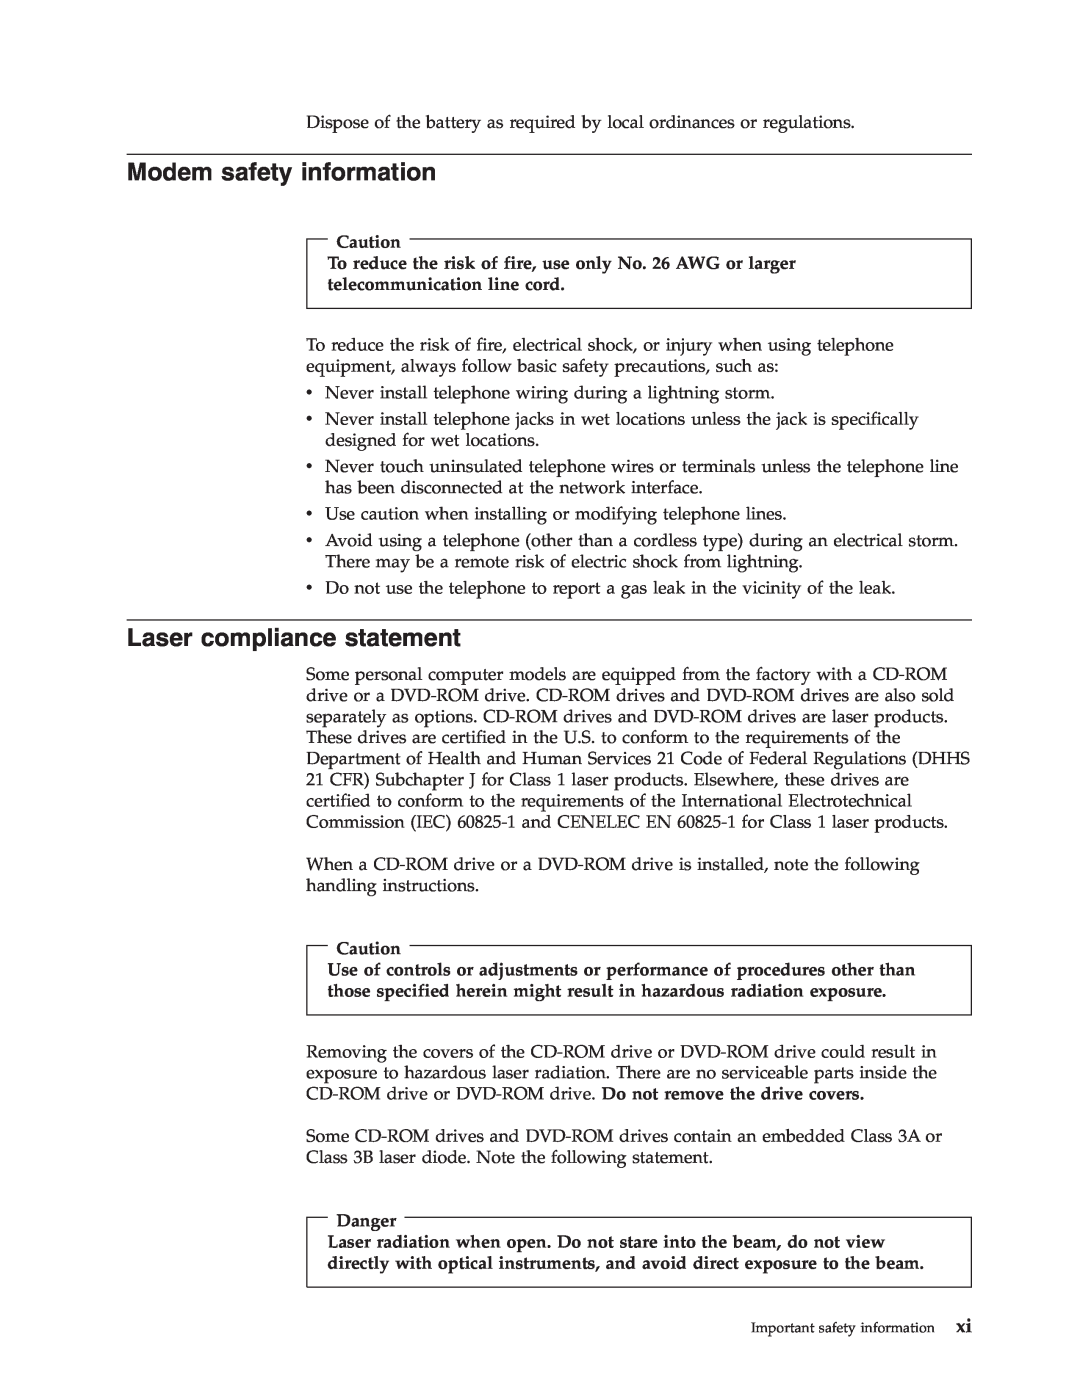 Lenovo 8010, 8813, 8796, 8808, 8800, 8804, 8792 manual Modem safety information, Laser compliance statement 